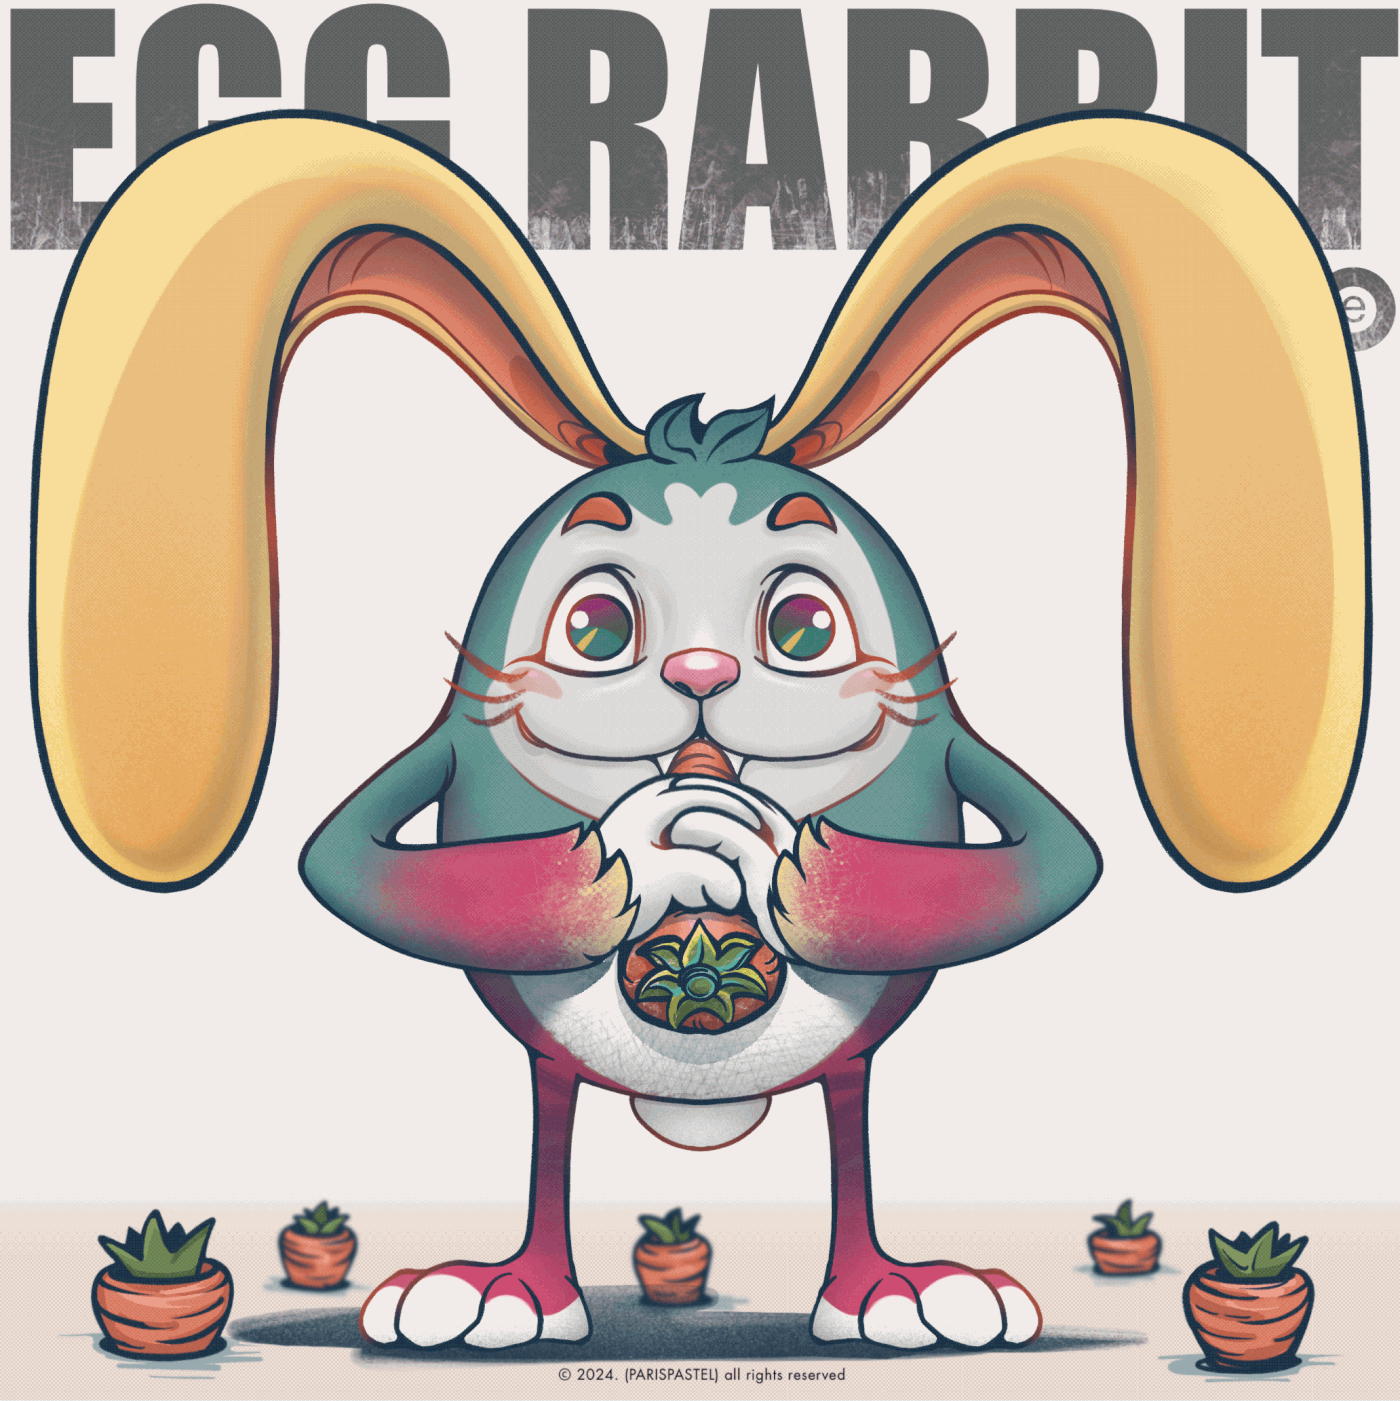 Carrot rabbit 